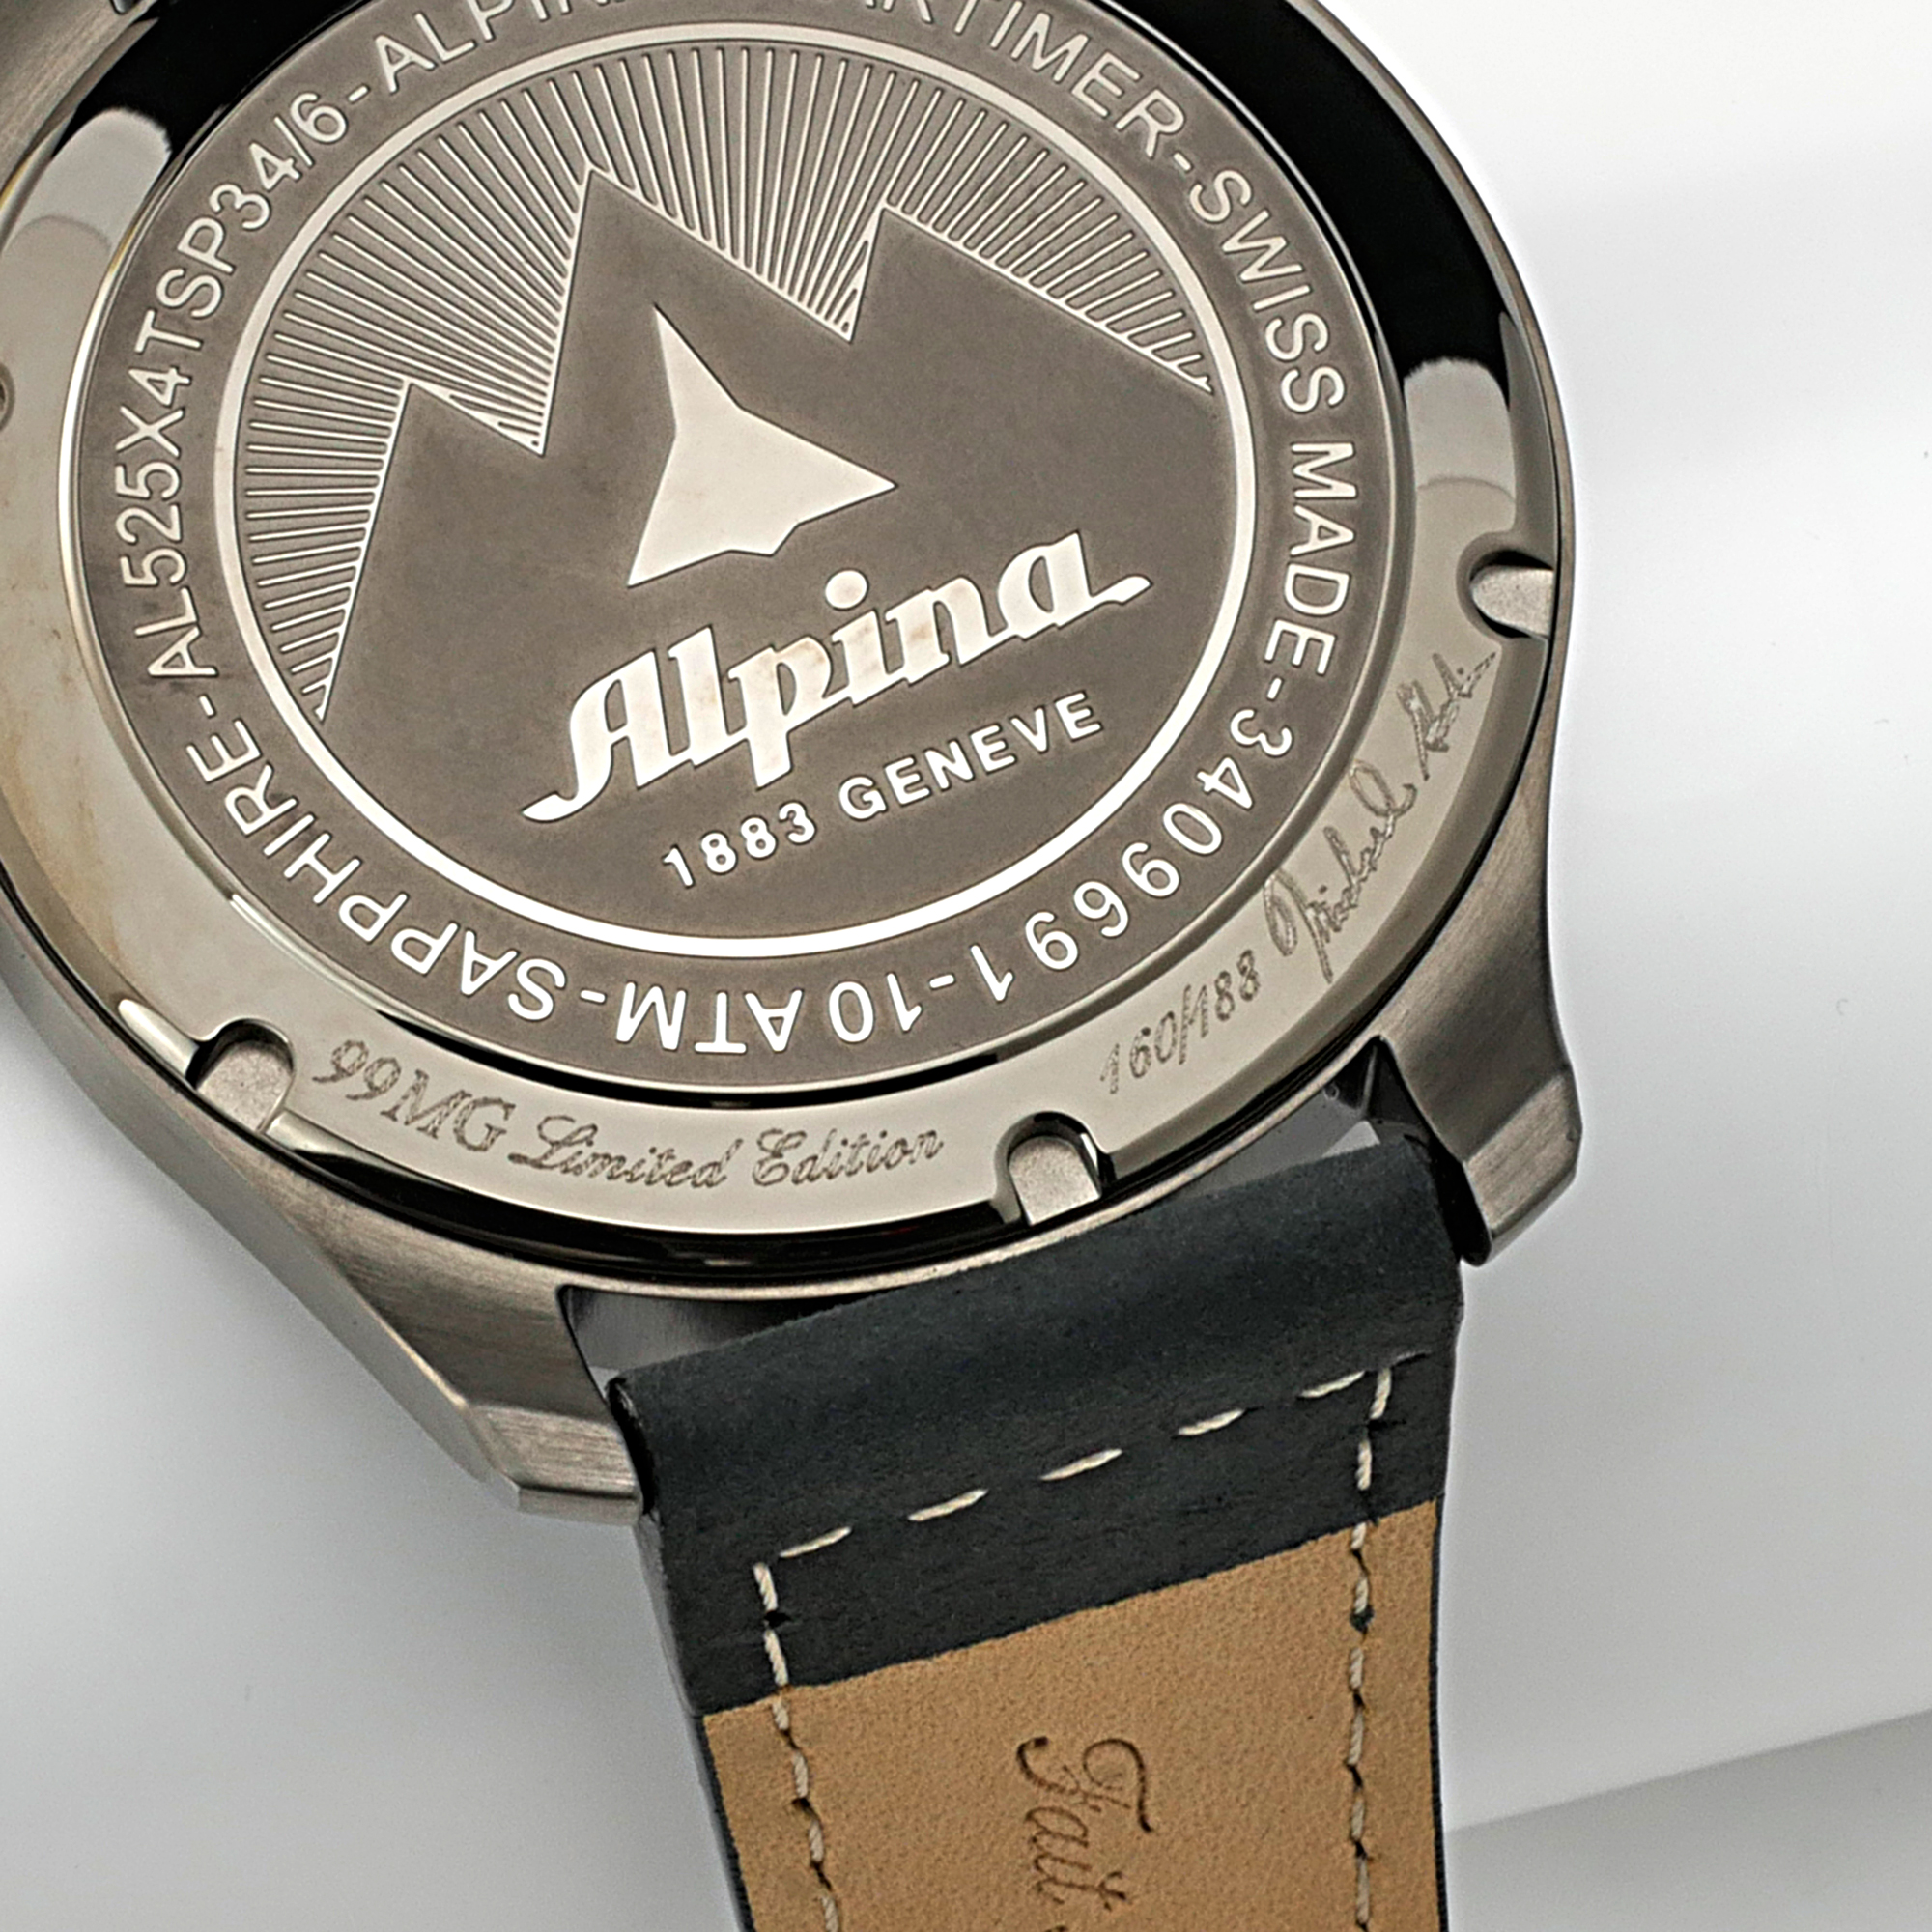 Alpina Startimer Pilot Automatic Men's Watch Dark Blue Dial / Black Leather AL-525NN4TS6 - Limited Edition